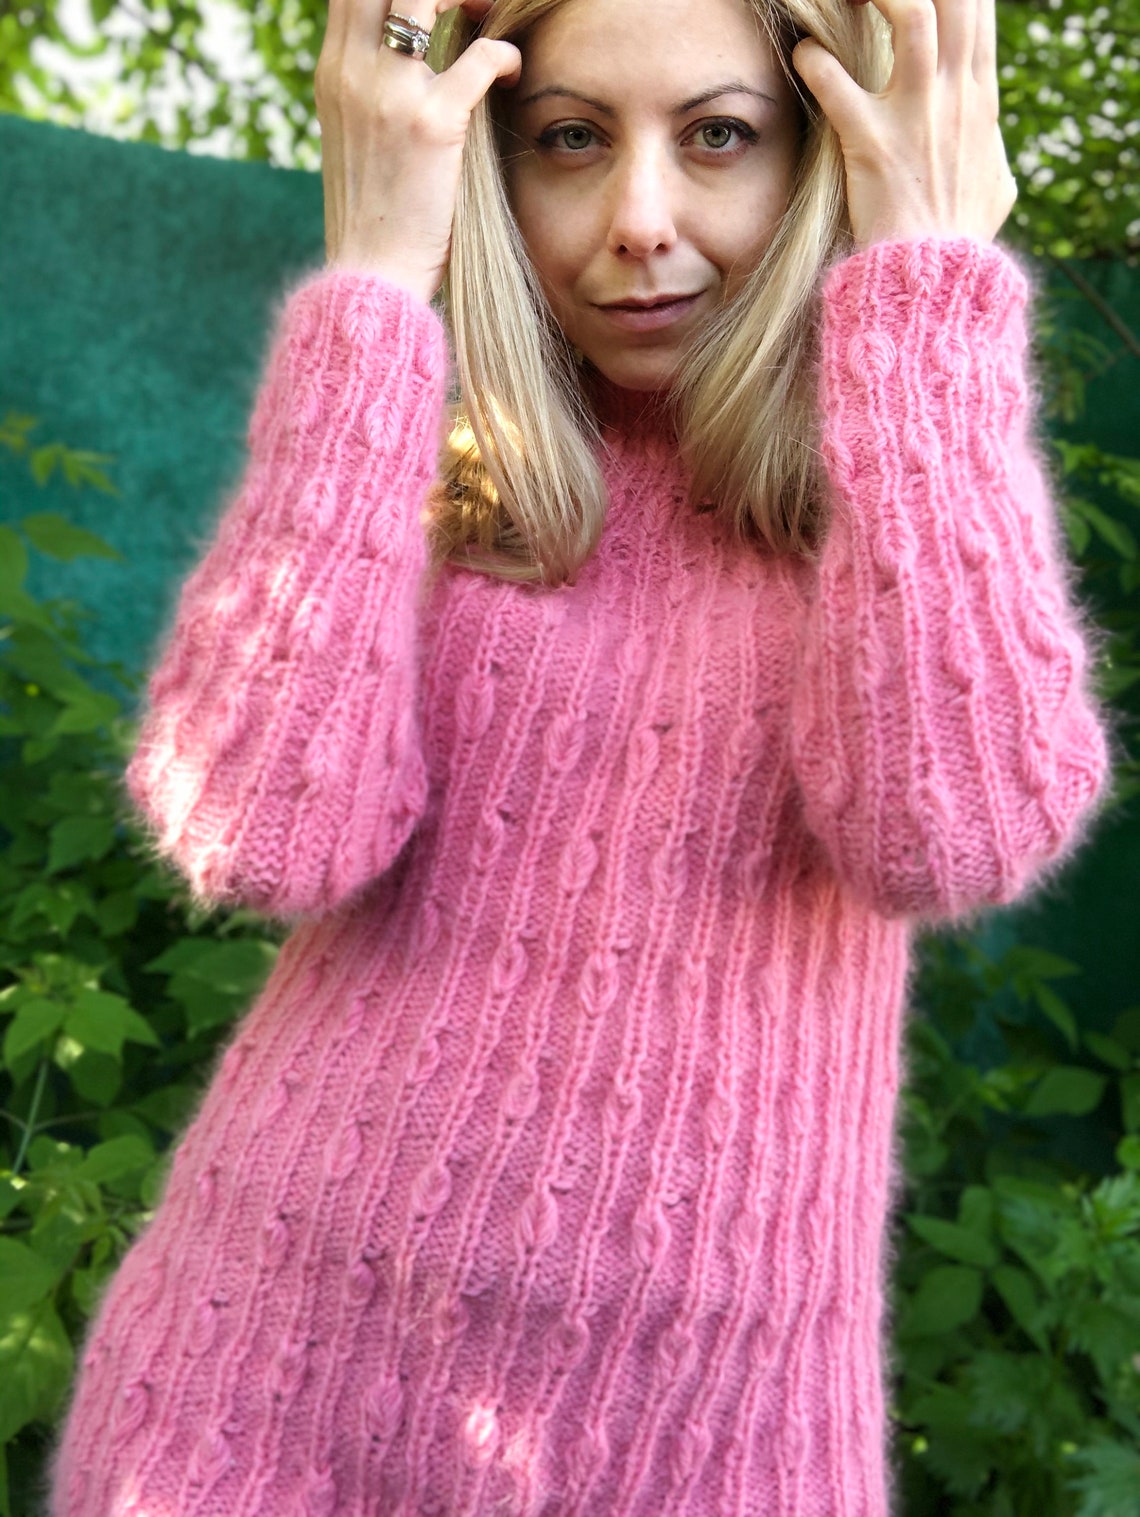 Pink angora sweater Soft knitted angora rabbit pullover | Etsy